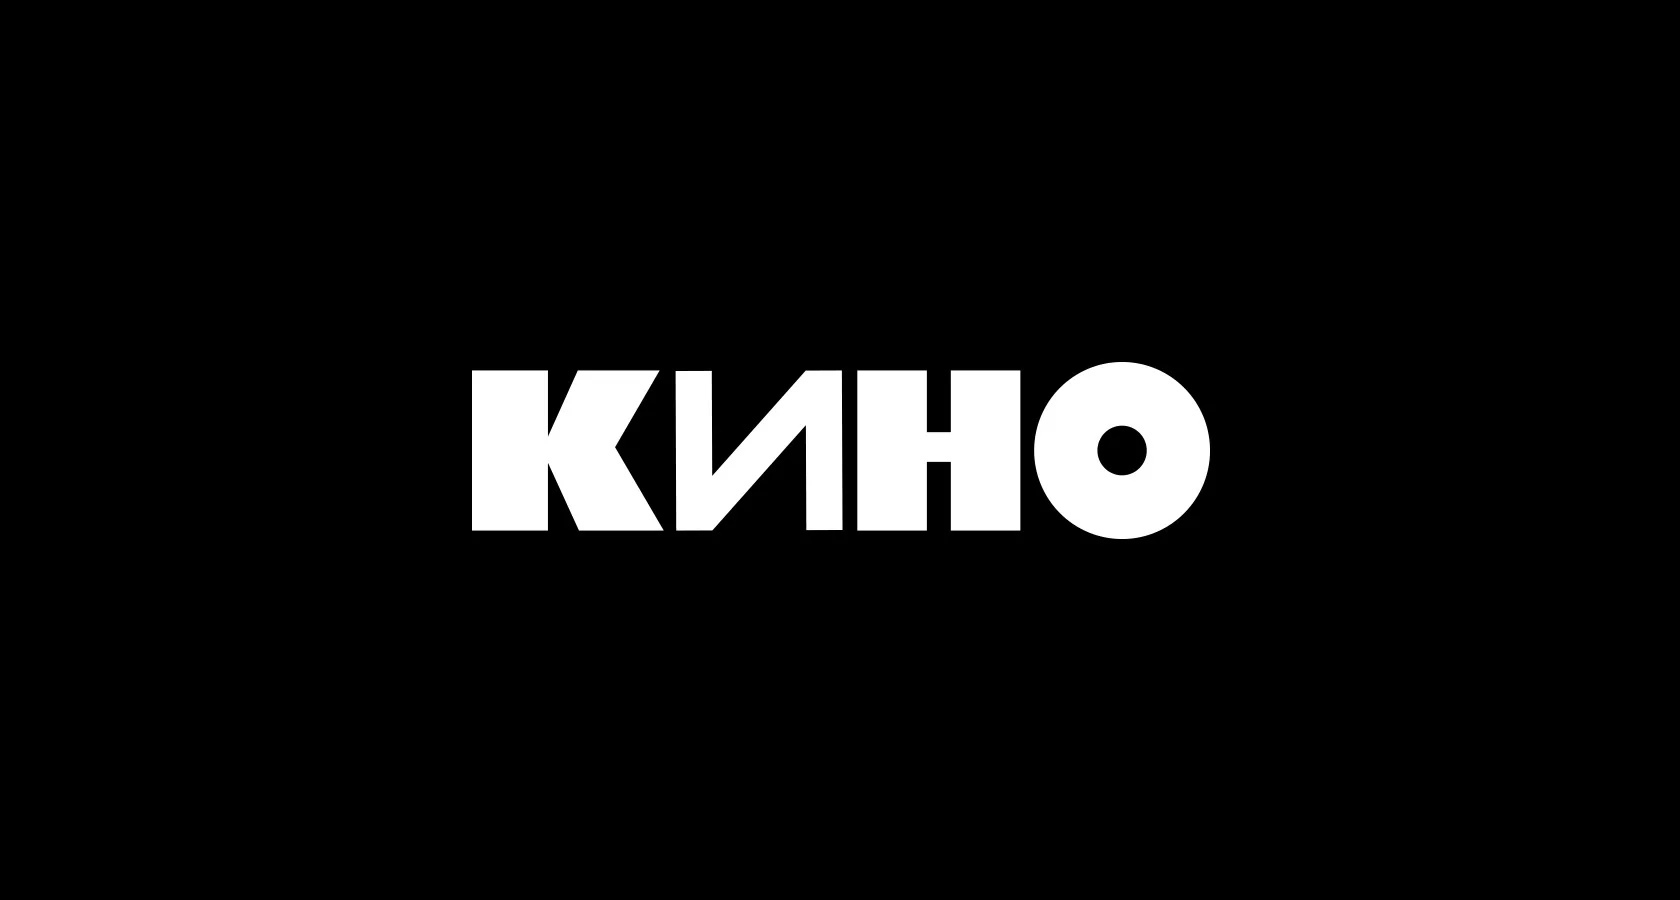 Le logo du groupe Kino